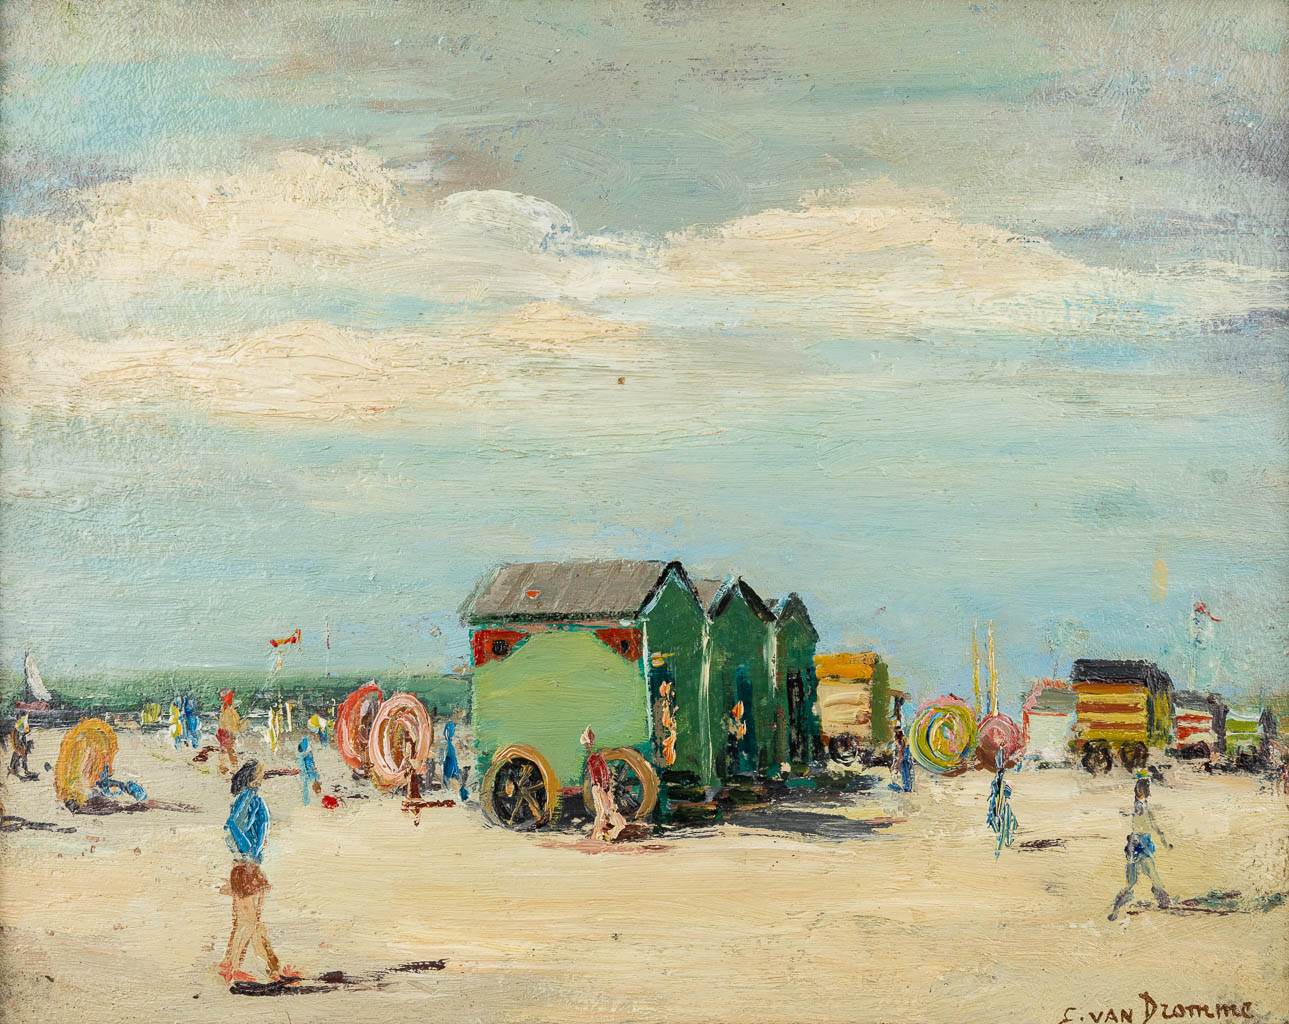 Emiel VAN DROMME (1913-1998) 'Summer beach' oil on panel. (W:30 x H:23 cm)